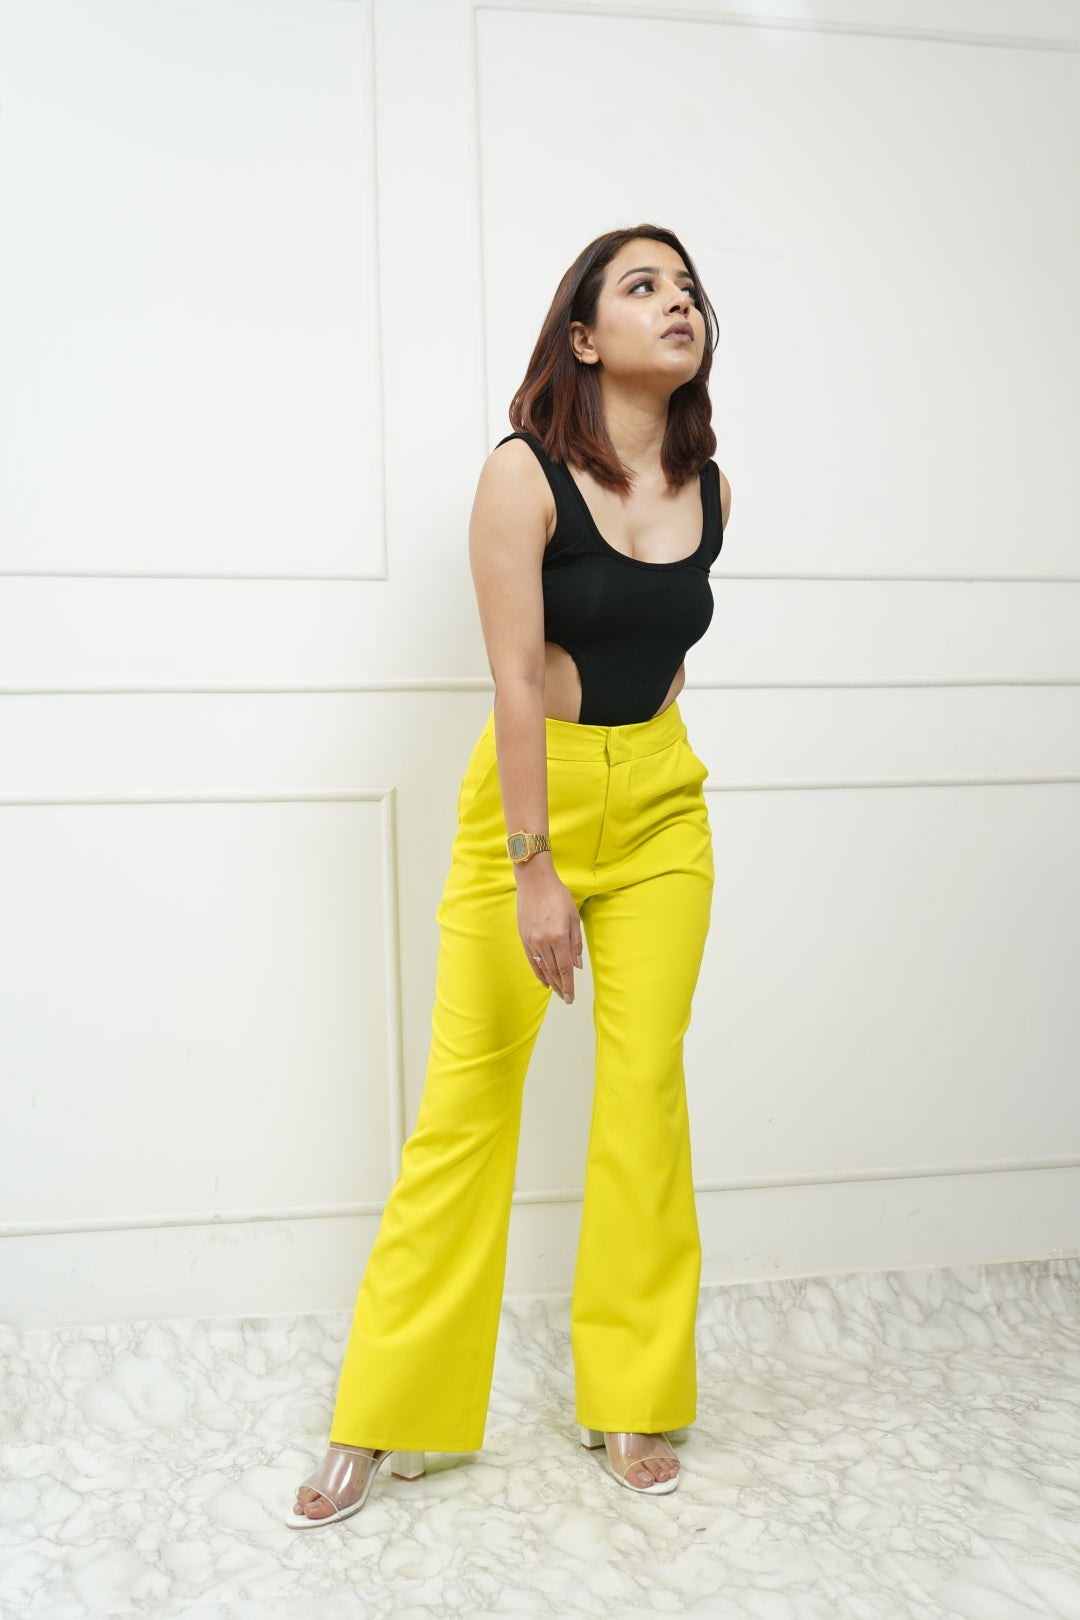 Combo Deal: Bodysuit With Neon Yellow Pants